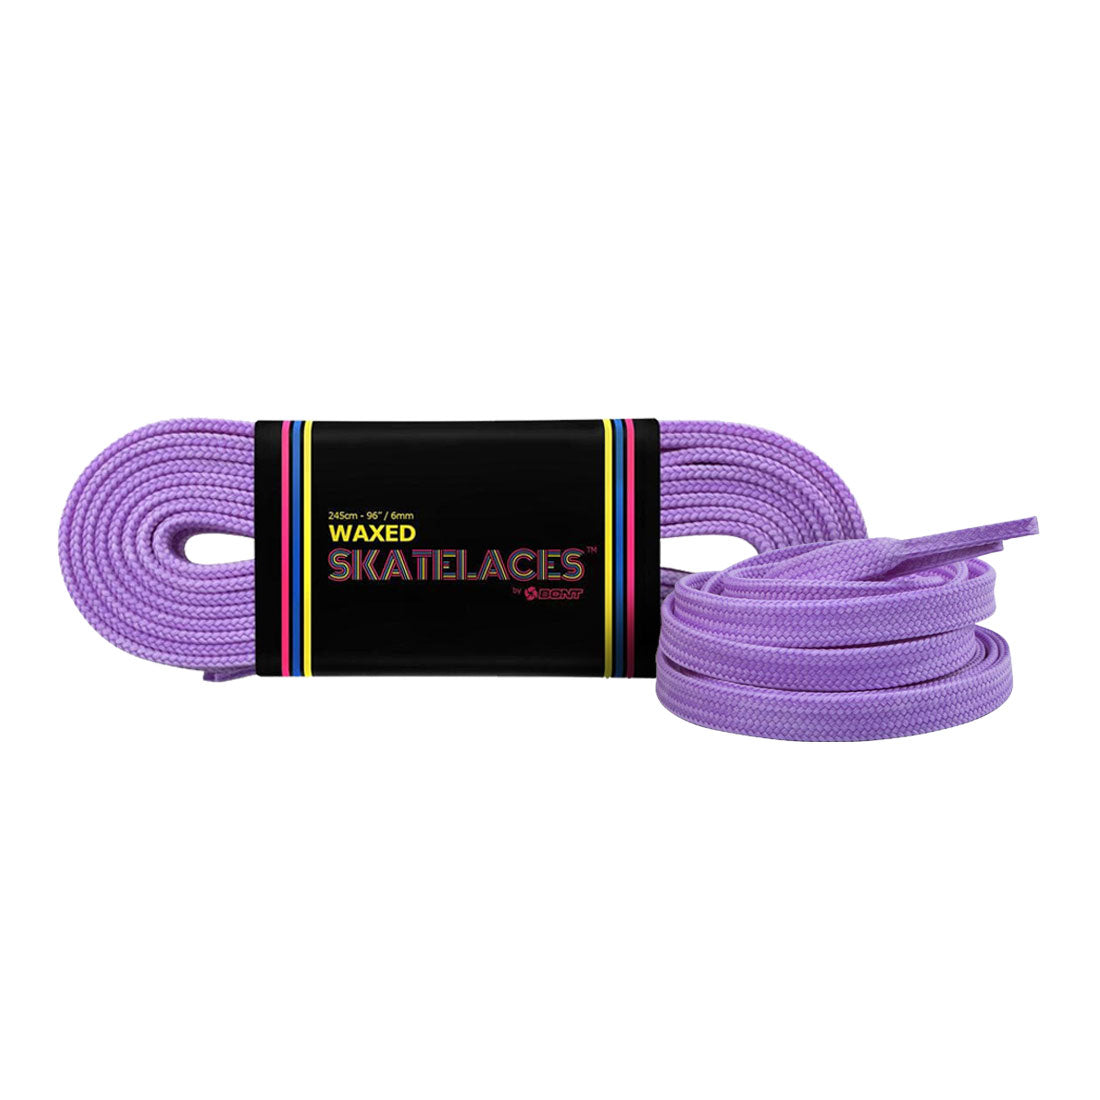 Bont Waxed 8mm Laces - 180cm/71in Amethyst Purple Laces